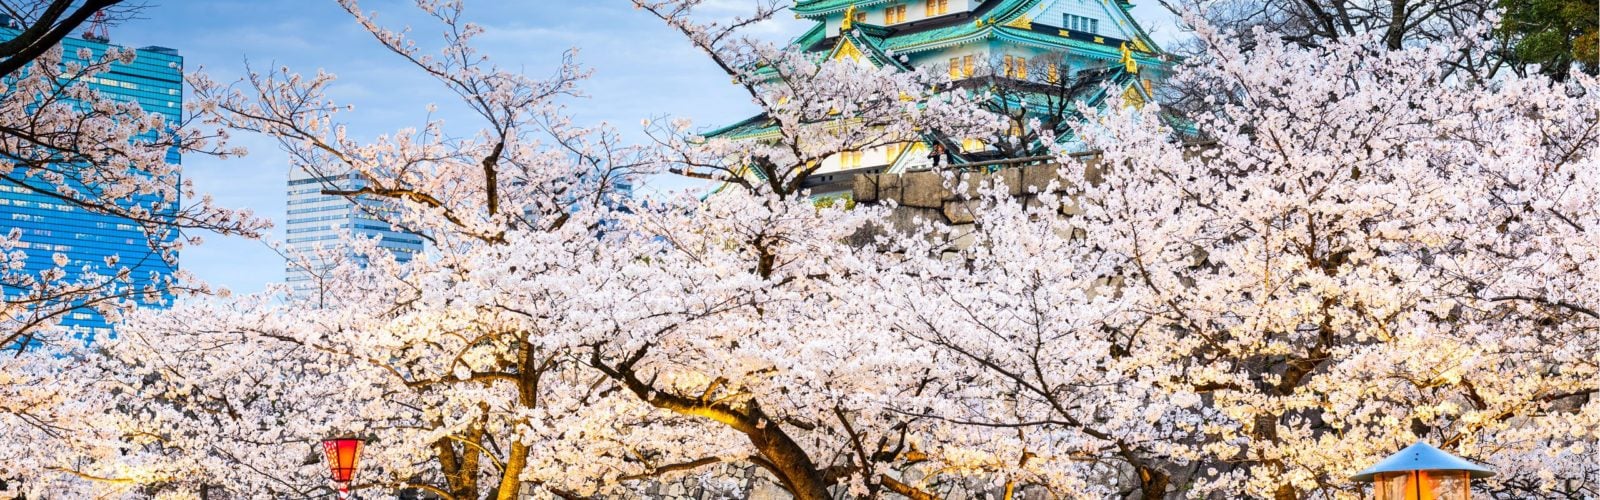 cherry-blossom-castle-japan